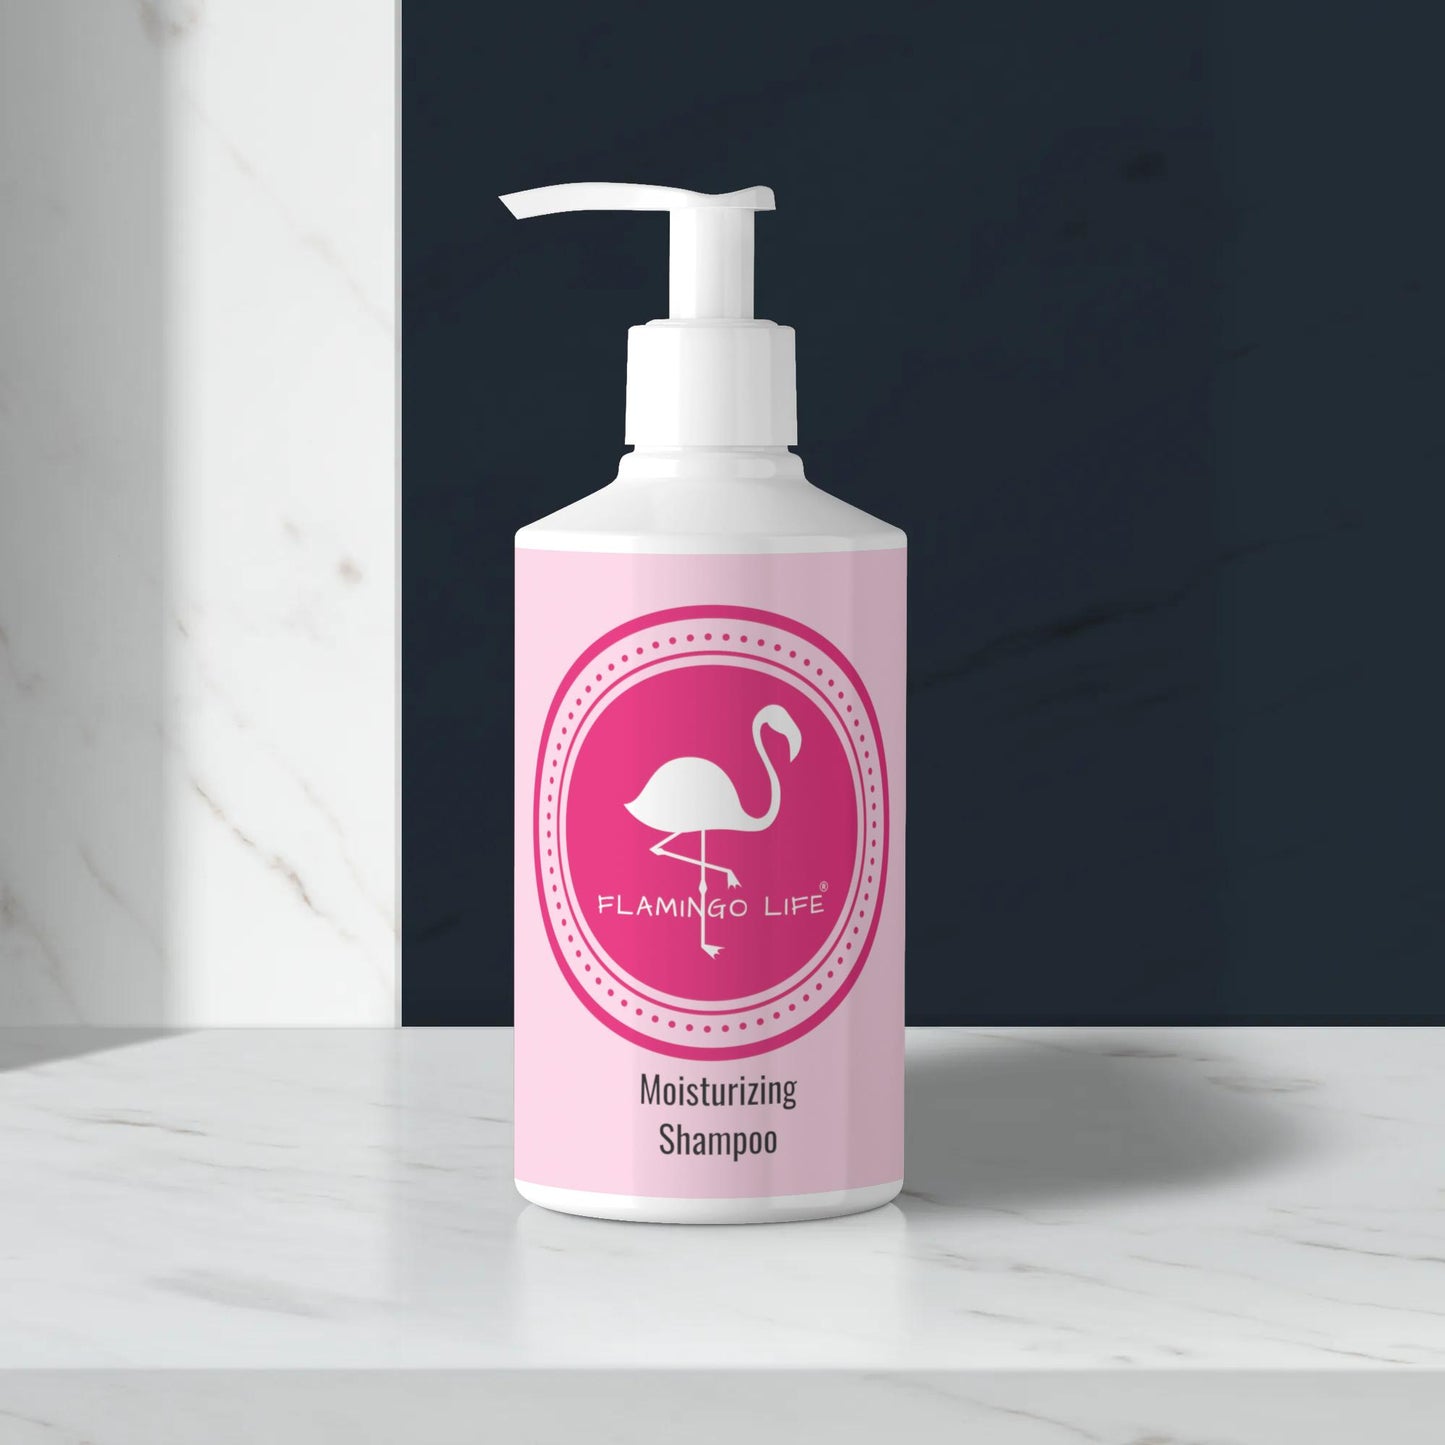 Flamingo Life® Moisturizing Shampoo with Aloe, Honey, and Ginkgo Biloba